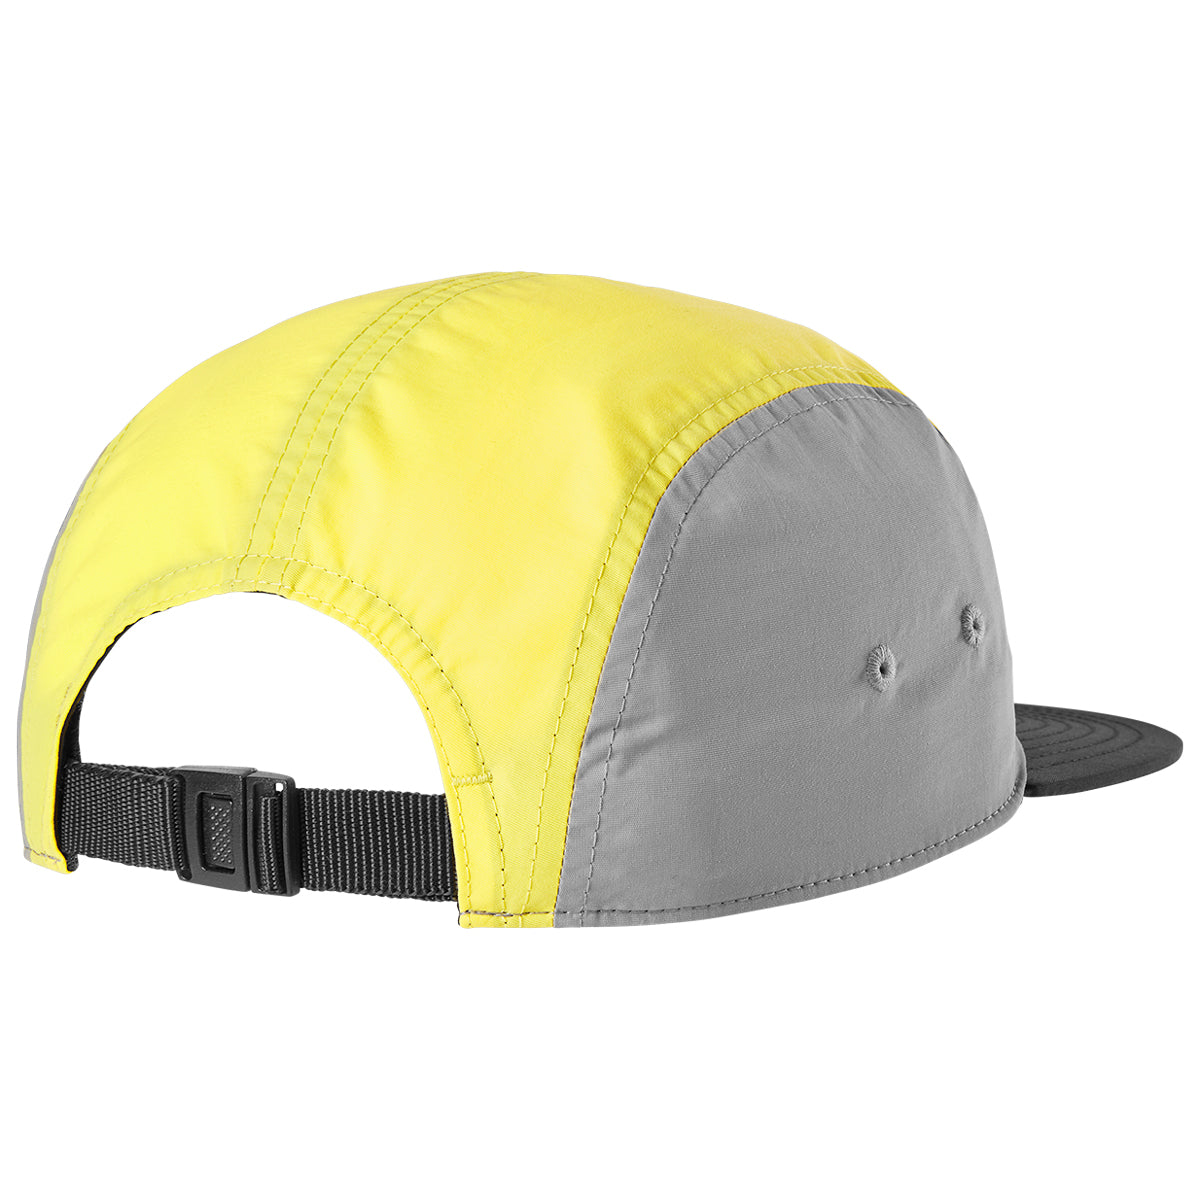 eS Chomp Camper Hat - Black/Yellow image 2